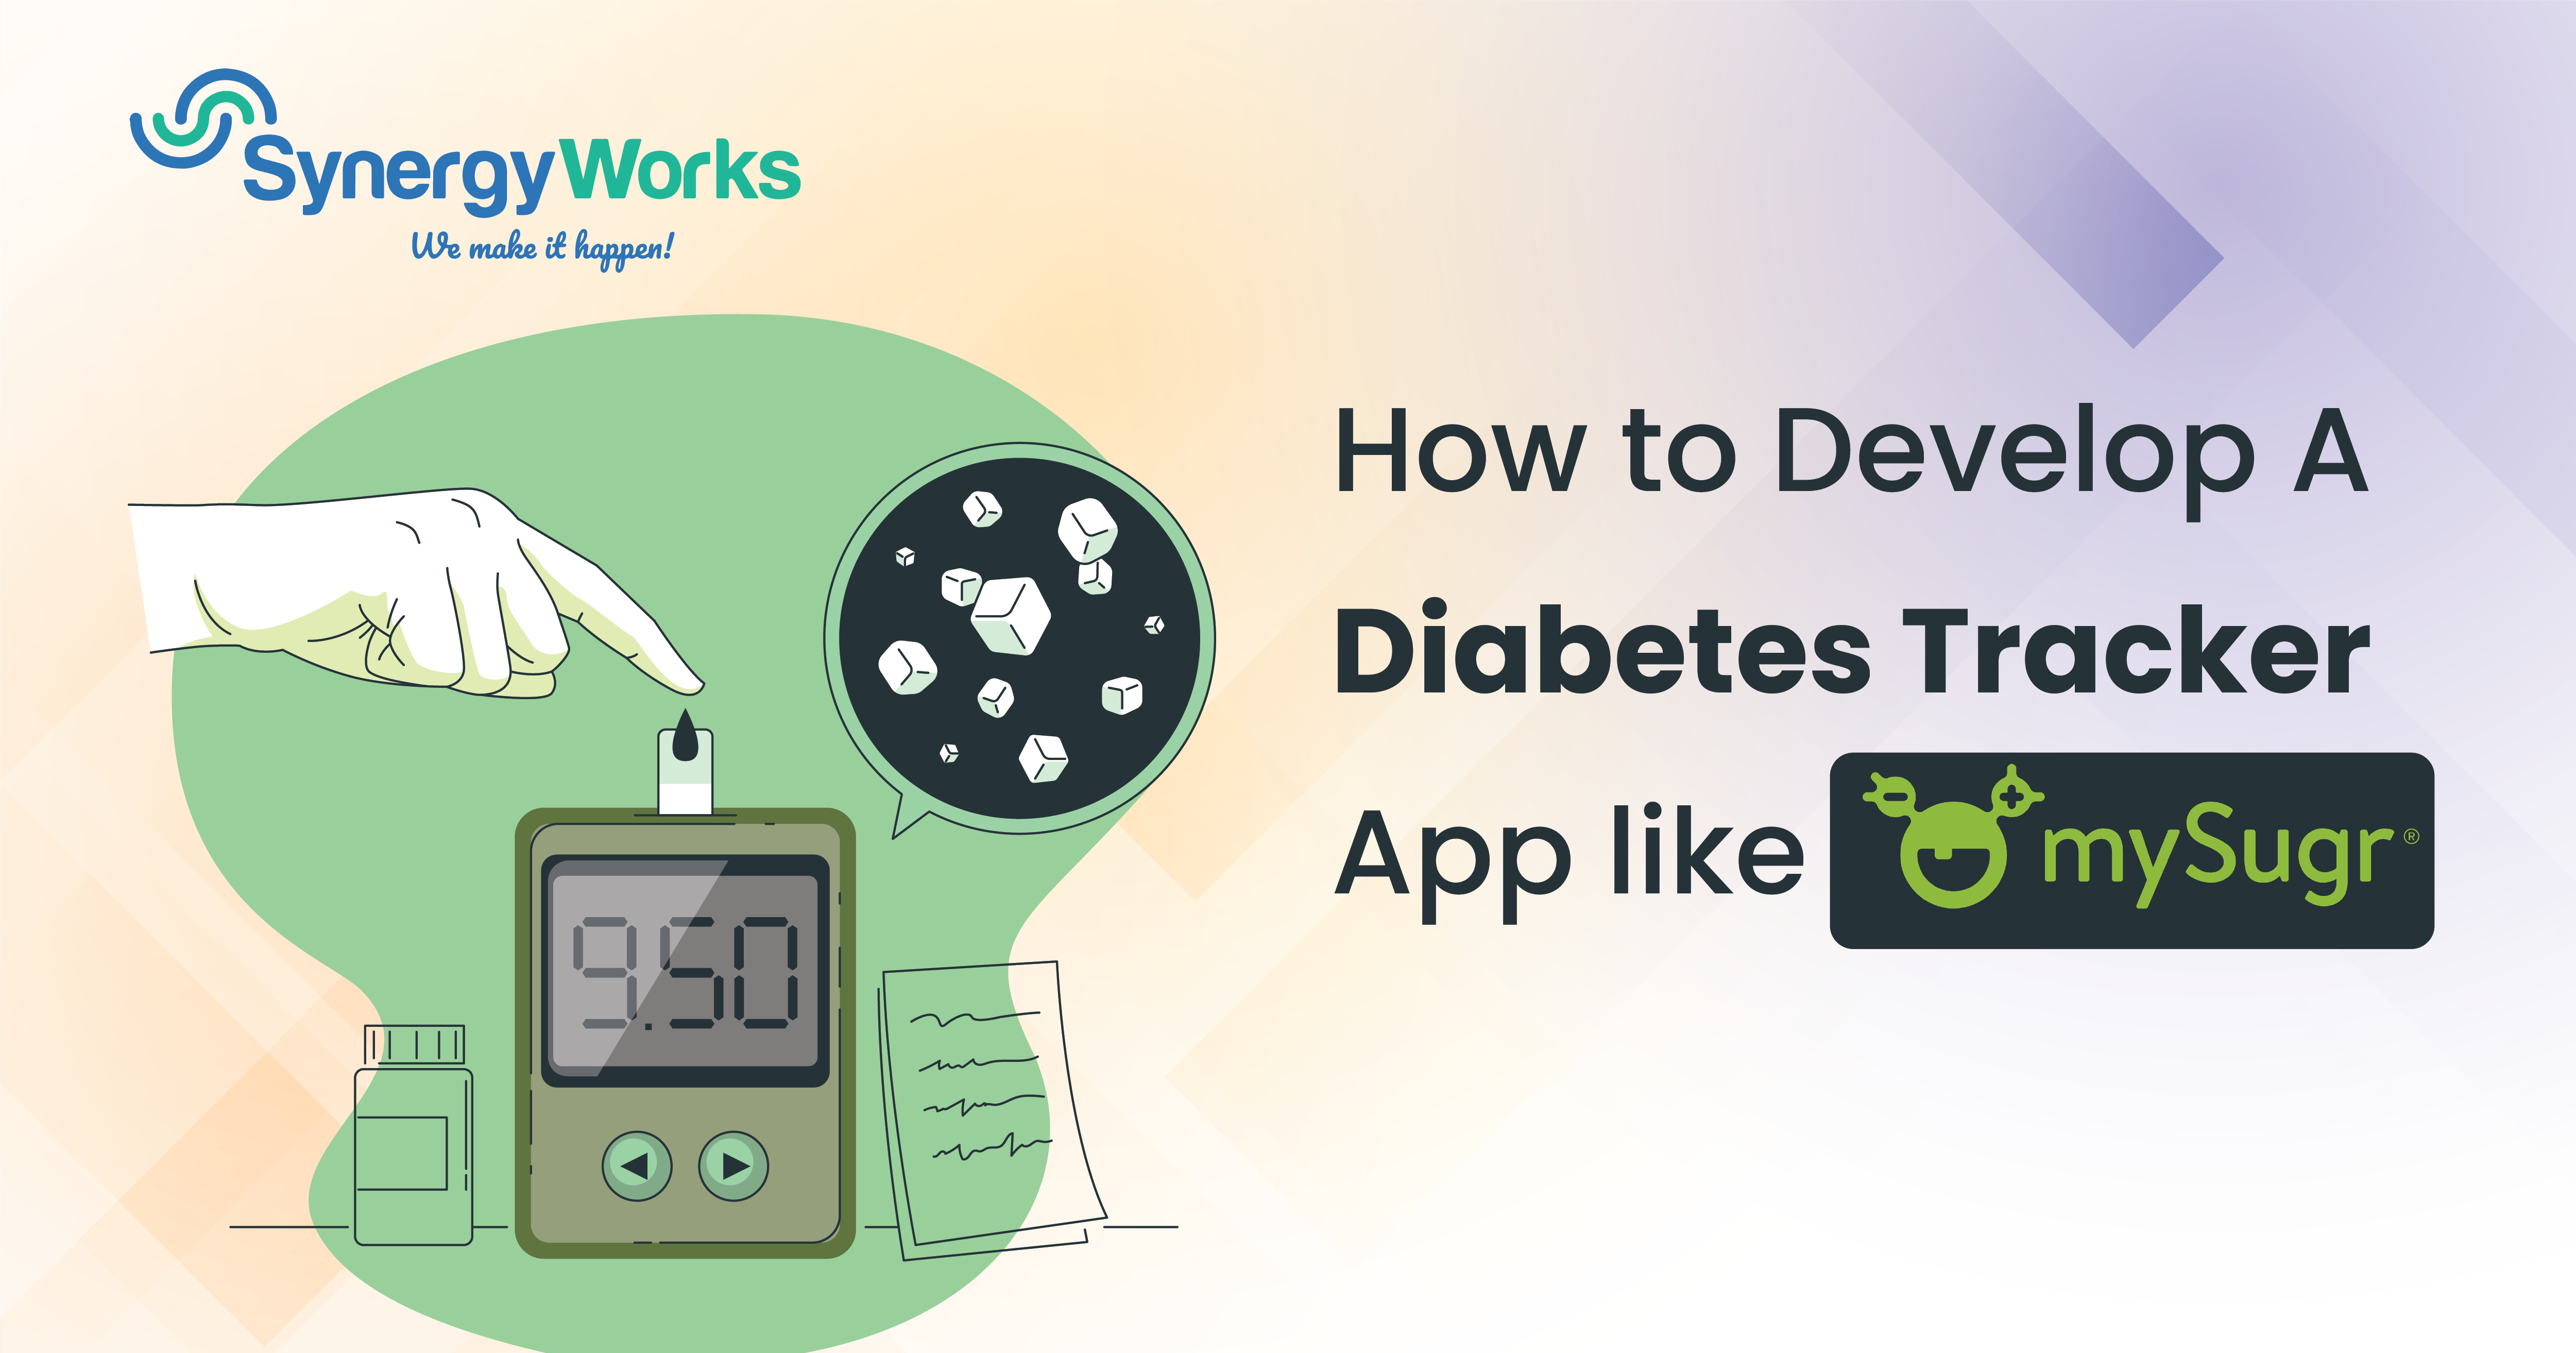 How to Develop a Diabetes Tracker App Like mySugr?